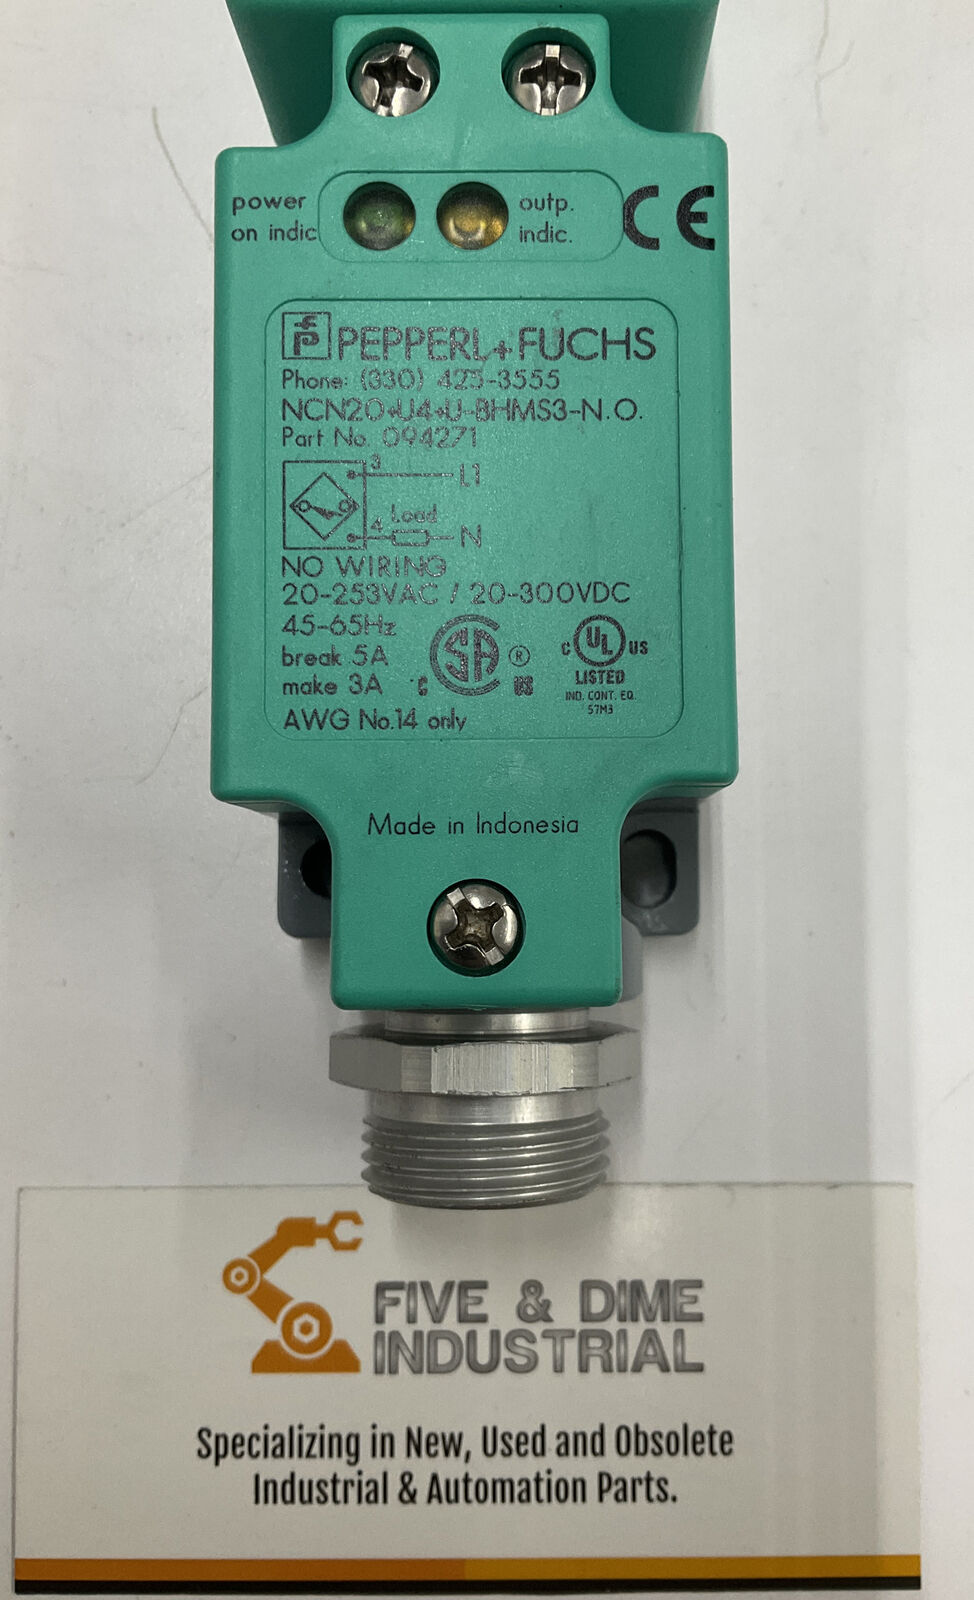 Pepperl Fuchs NCN20+U4+U-BHMS 3-N.O. 5-Way Sensor (RE114)